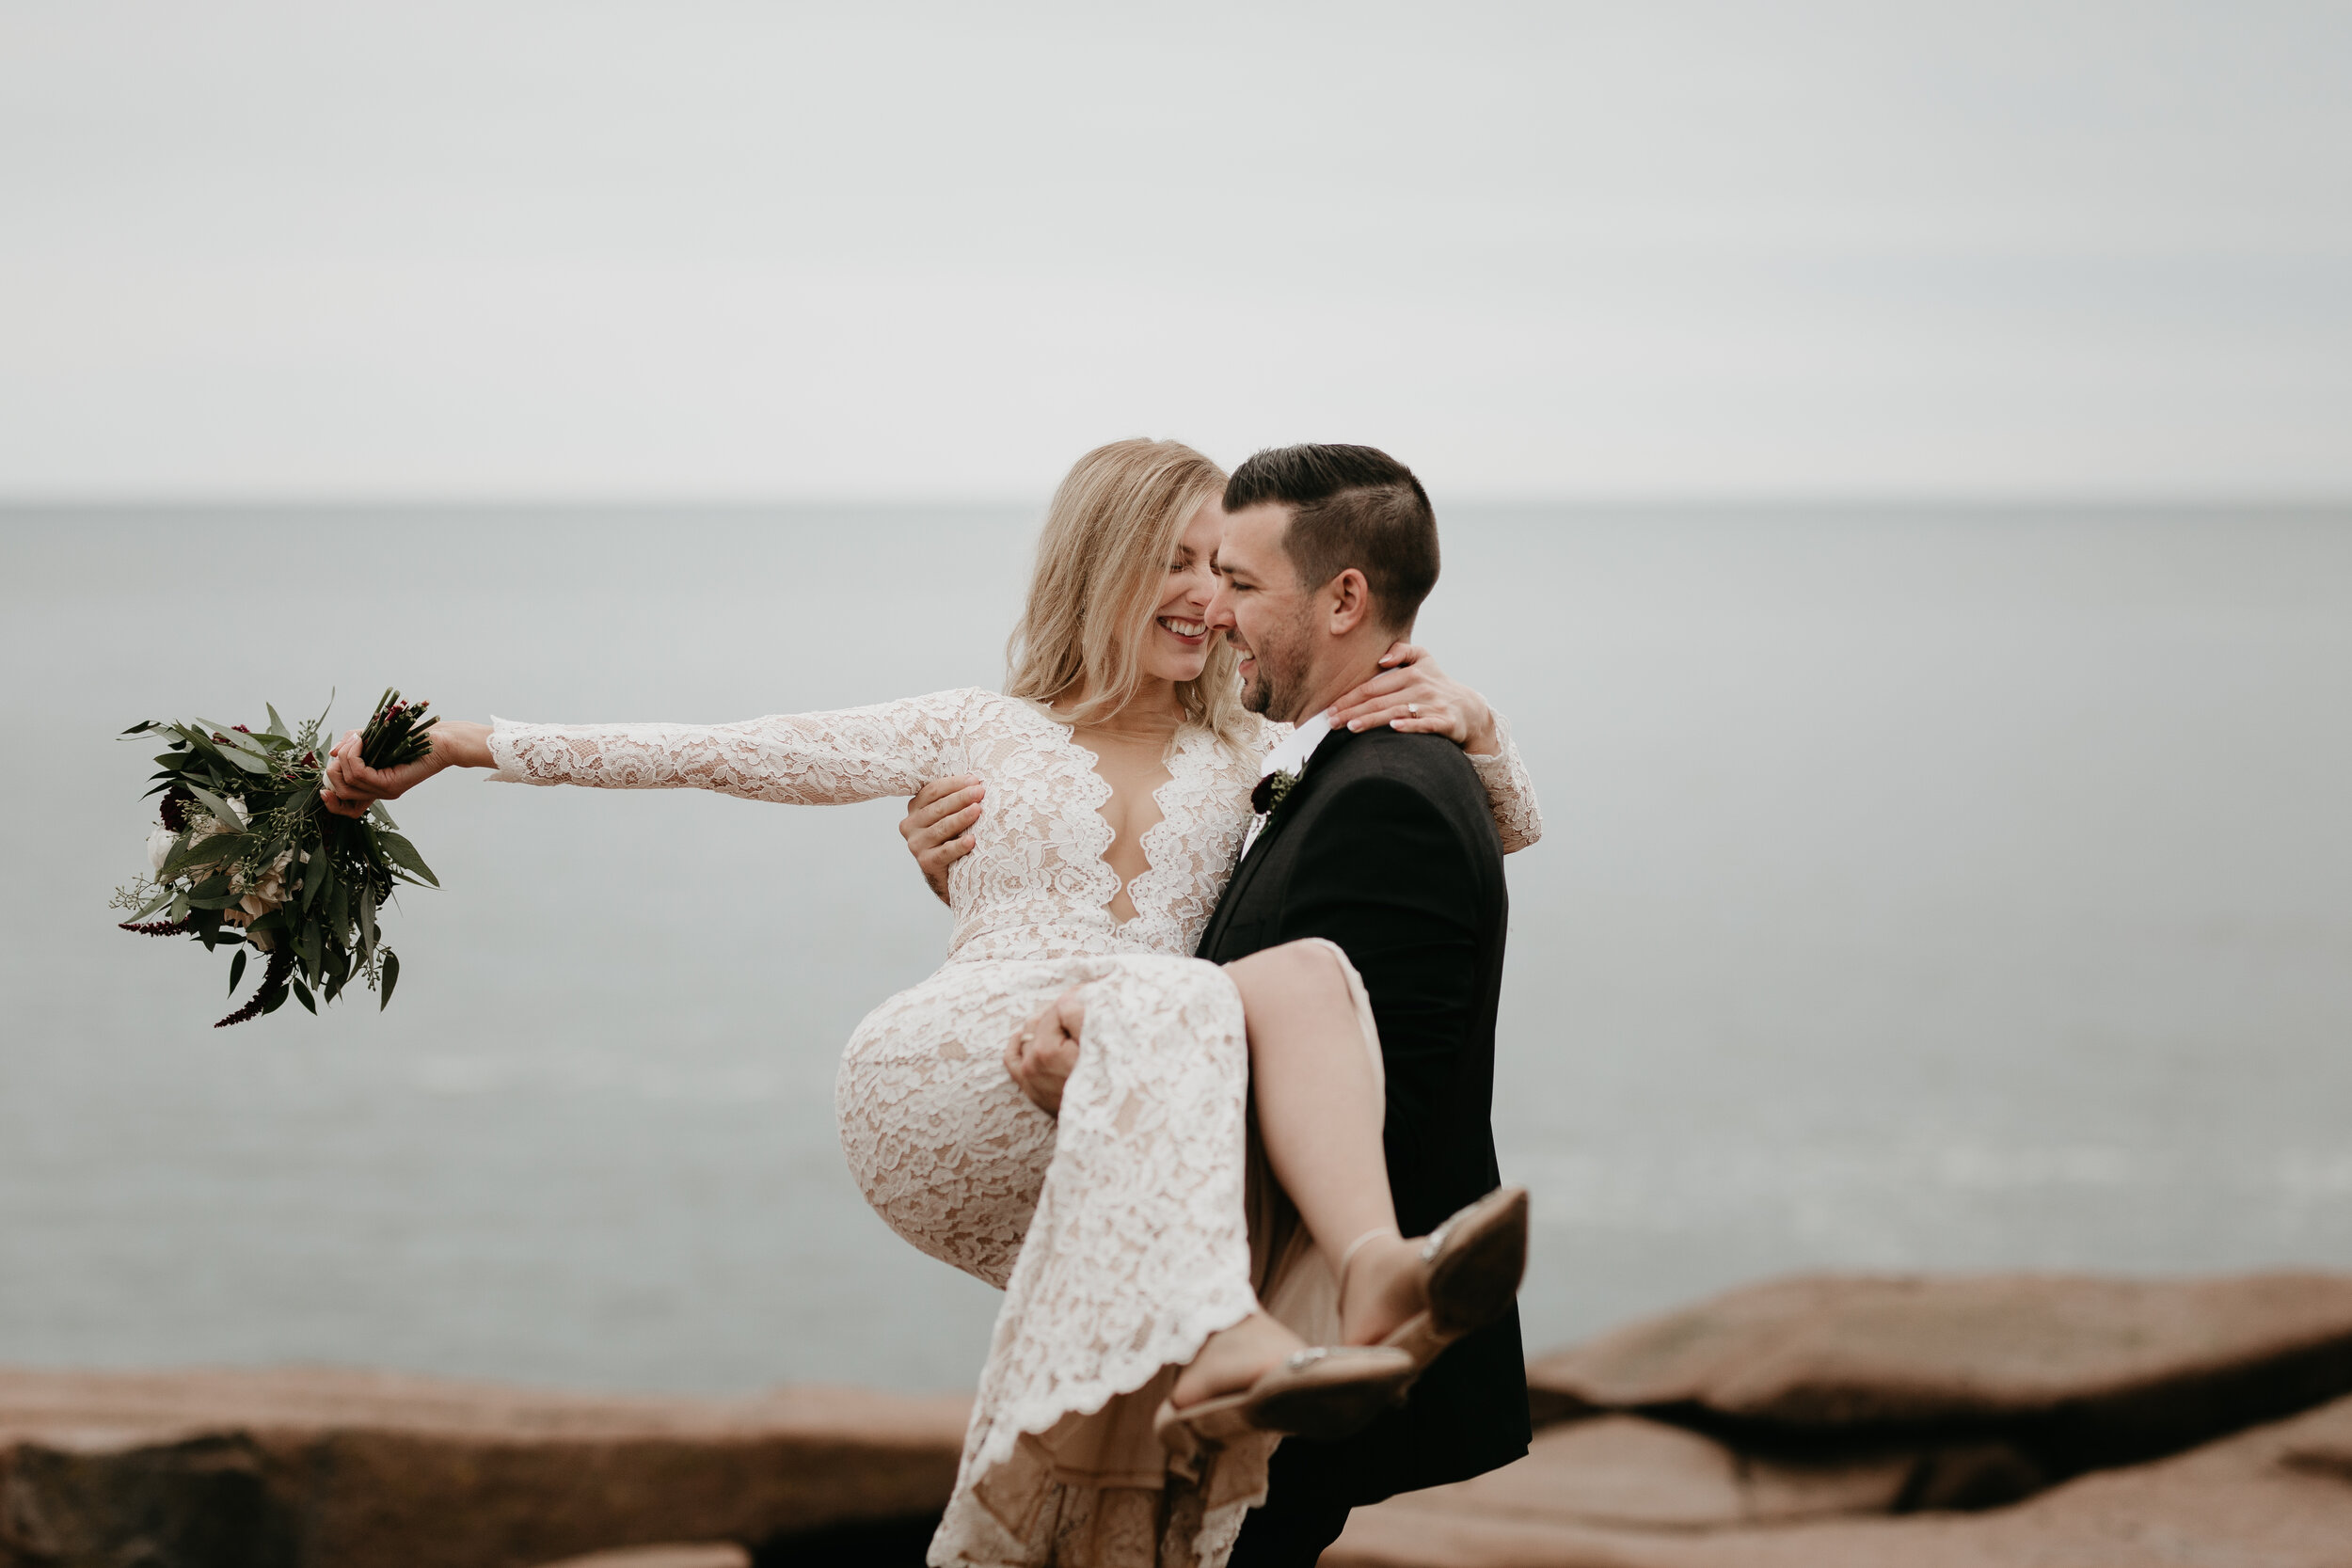 Nicole-Daacke-Photography-Acadia-national-park-elopement-photography-elopement-in-acadia-inspiration-maine-intimate-wedding-destination-elopement-photographer-rainy-day-maine-coast-bar-harbor-elopement-photography-165.jpg